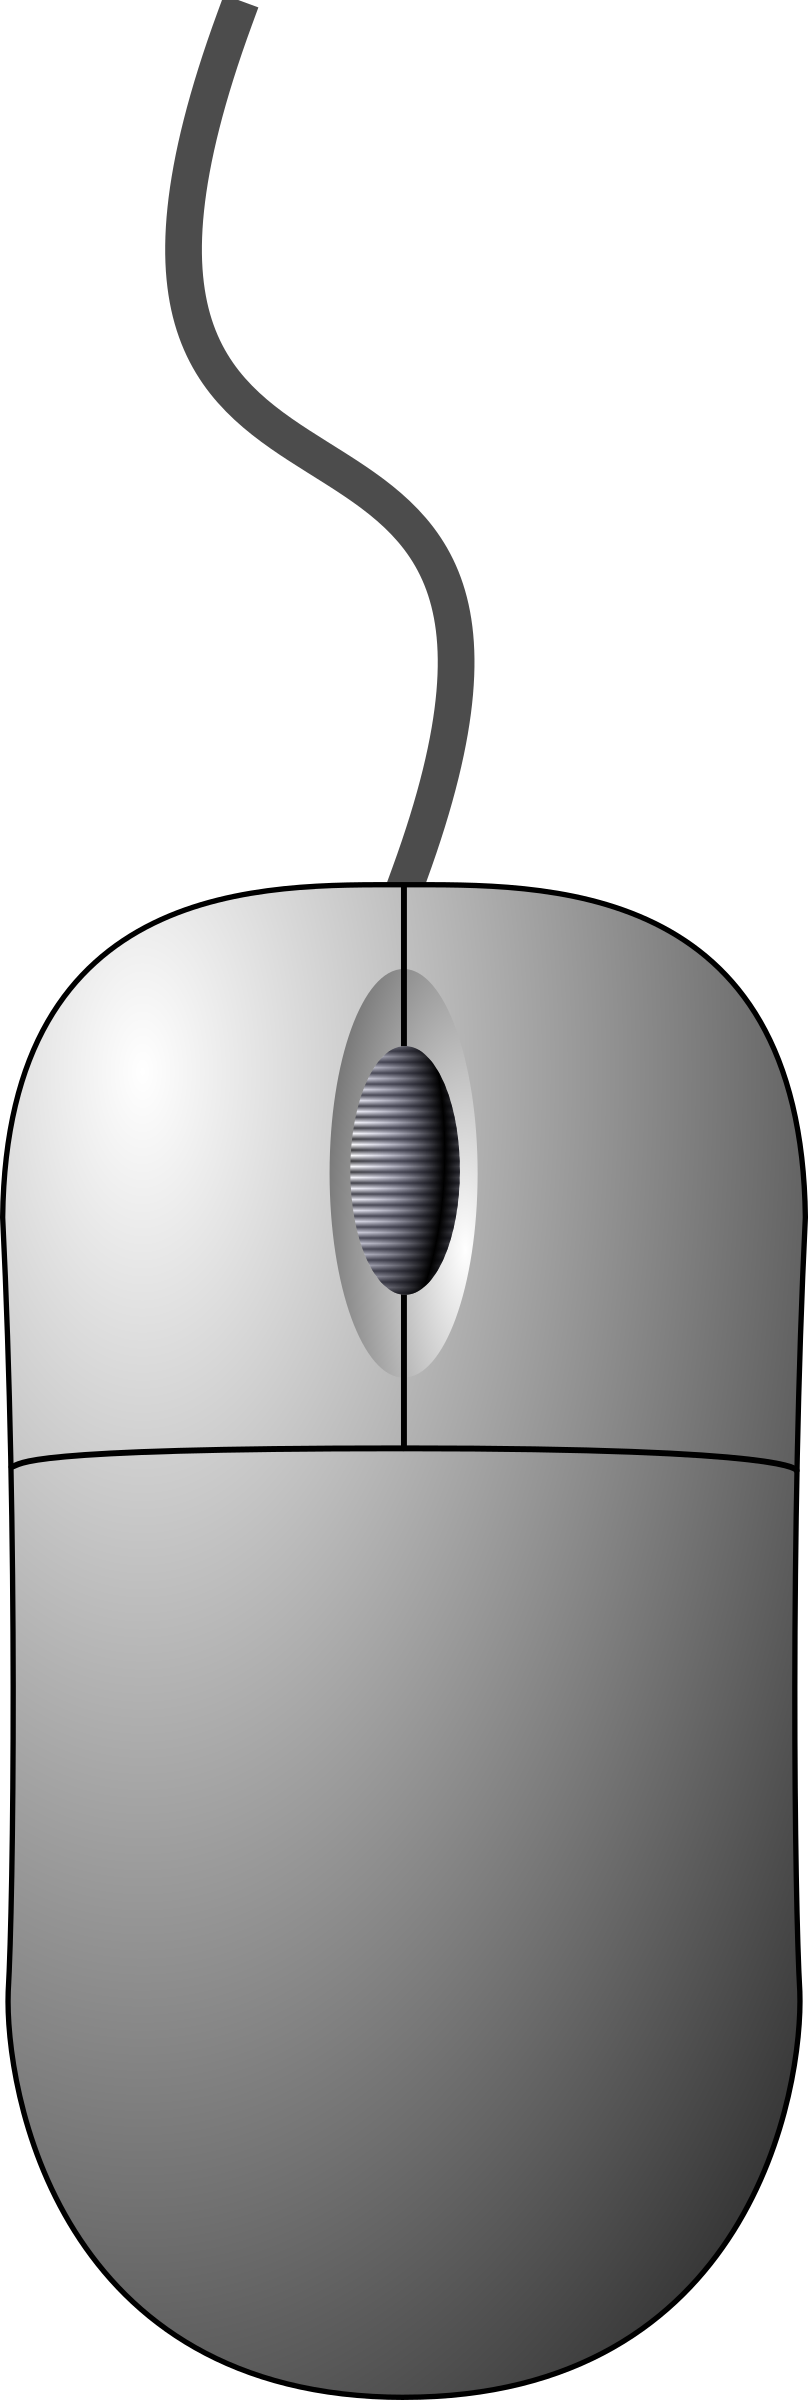 Big Image - Computer Mouse Clip Art (808x2400)